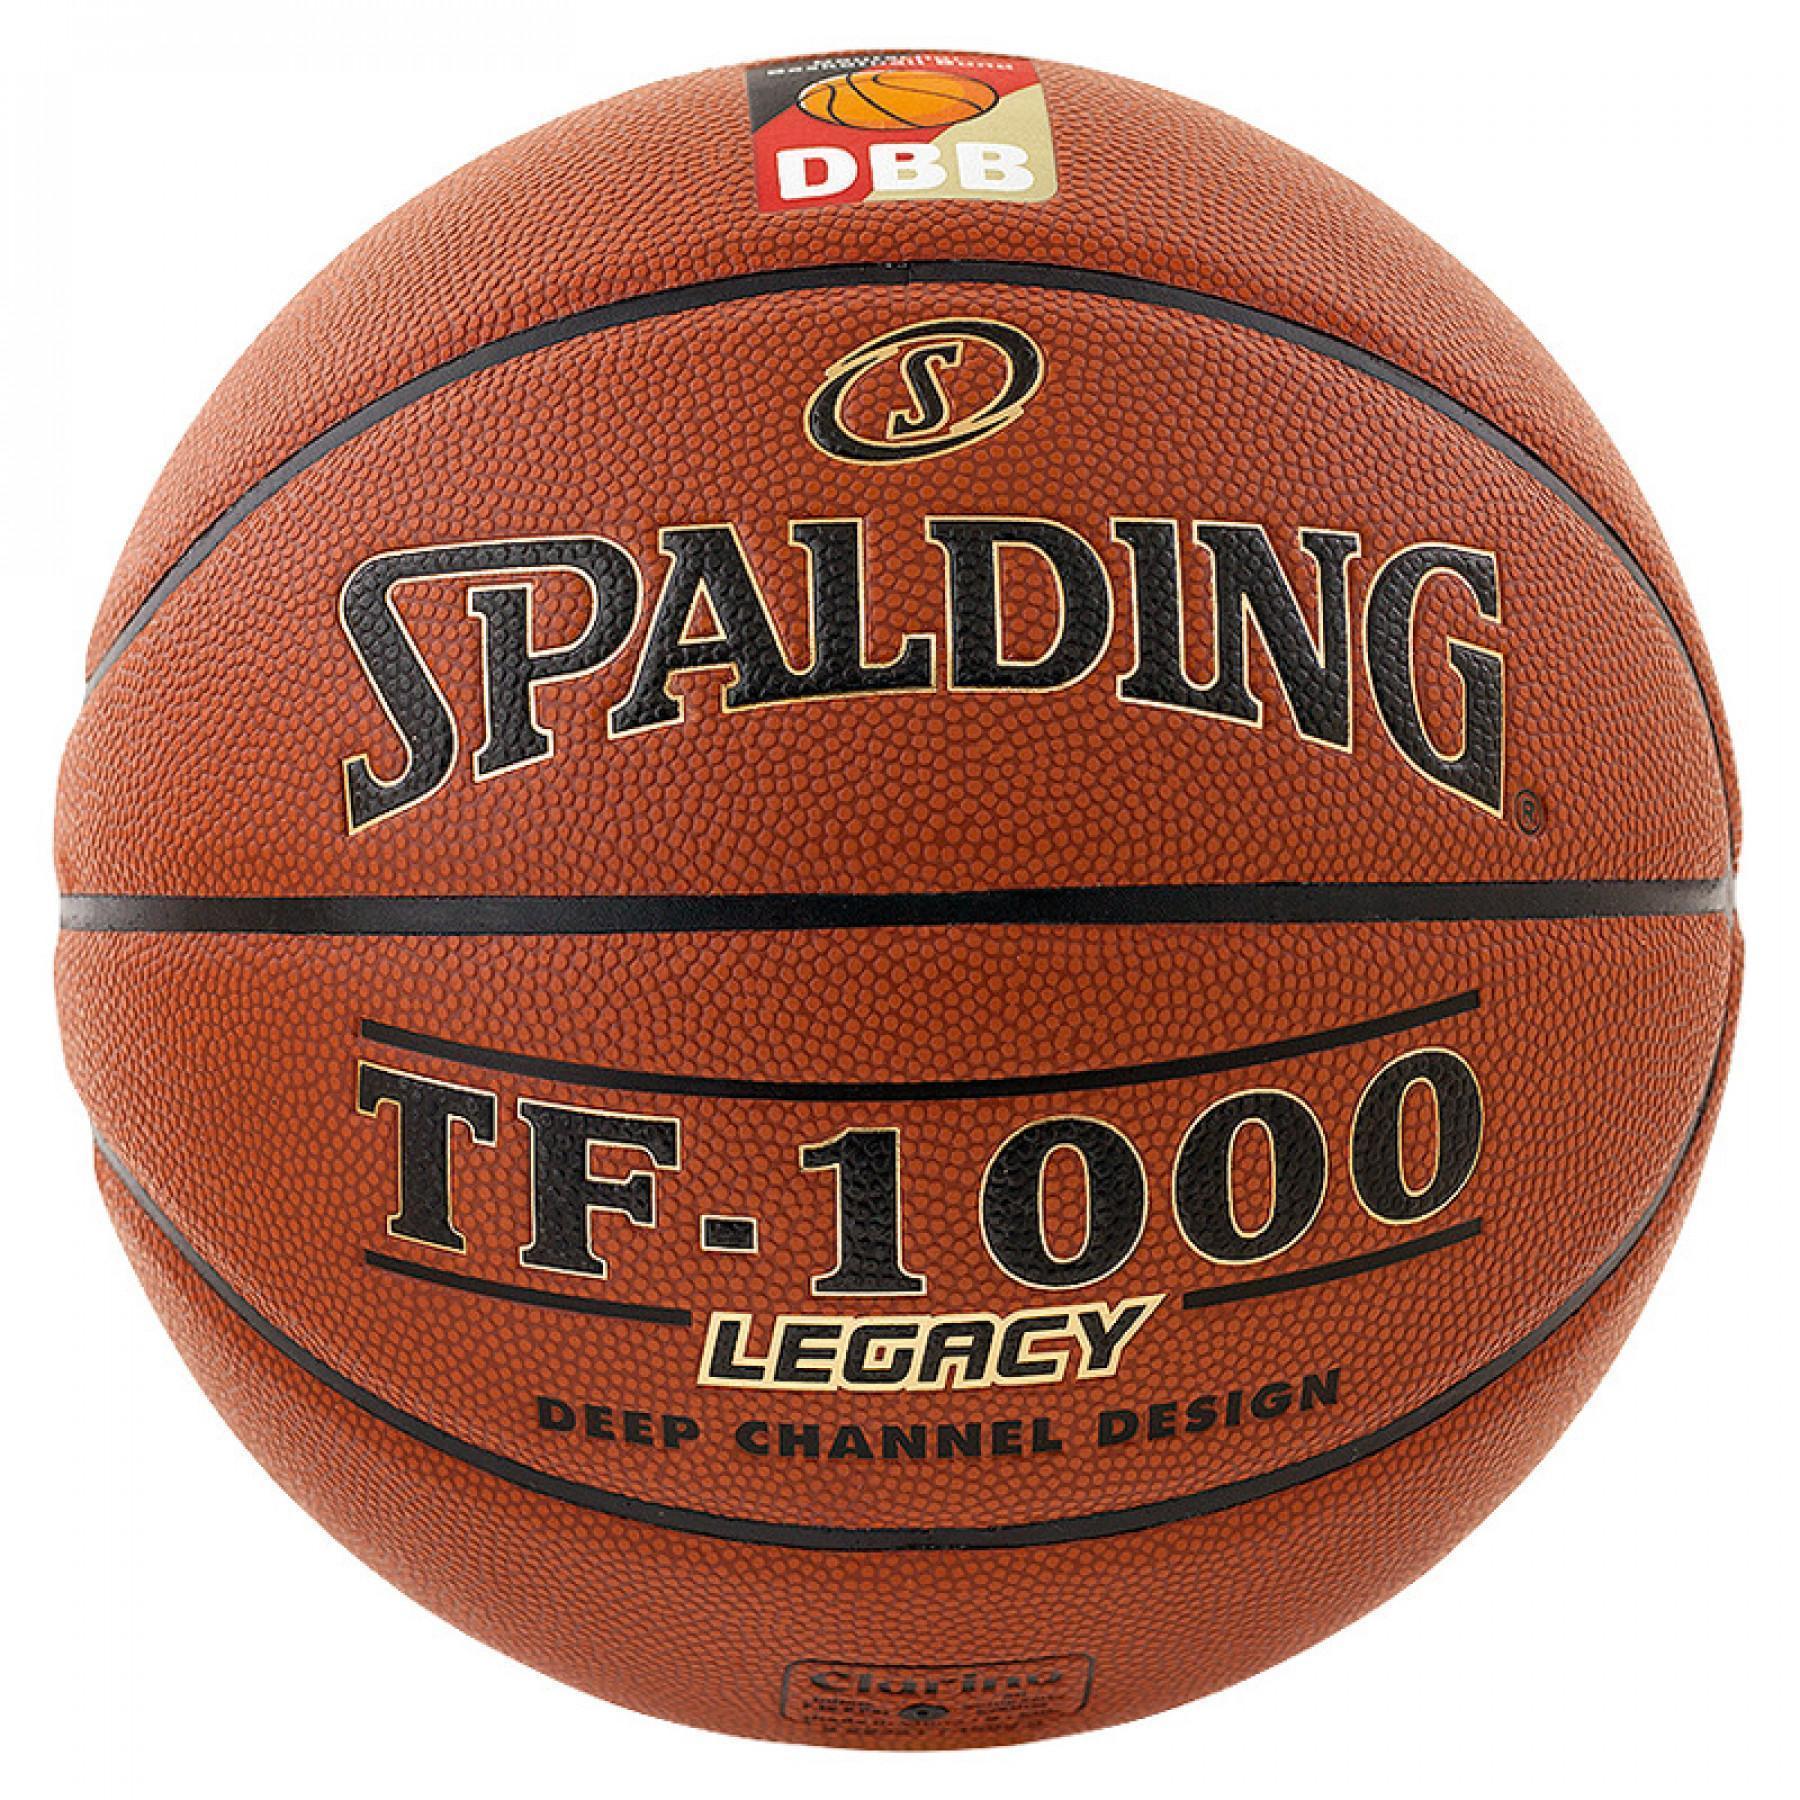 Balloon Spalding DBB Tf1000 Legacy (74-589z)